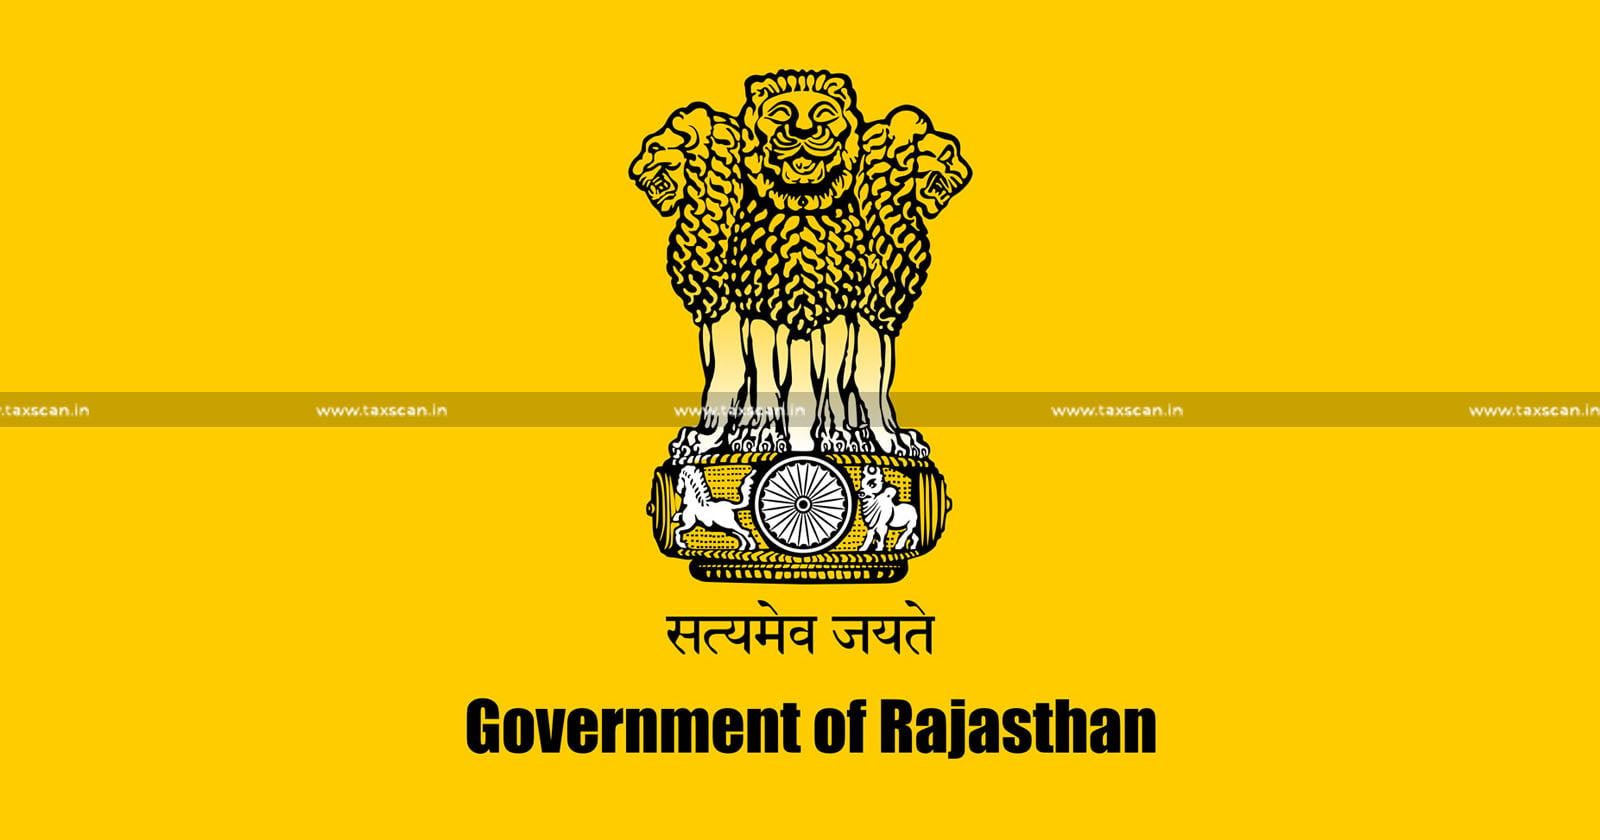 Rajasthan government - Tax Mitras - VAT - GST - GST Collection Facilitation - Collection Facilitation - taxscan